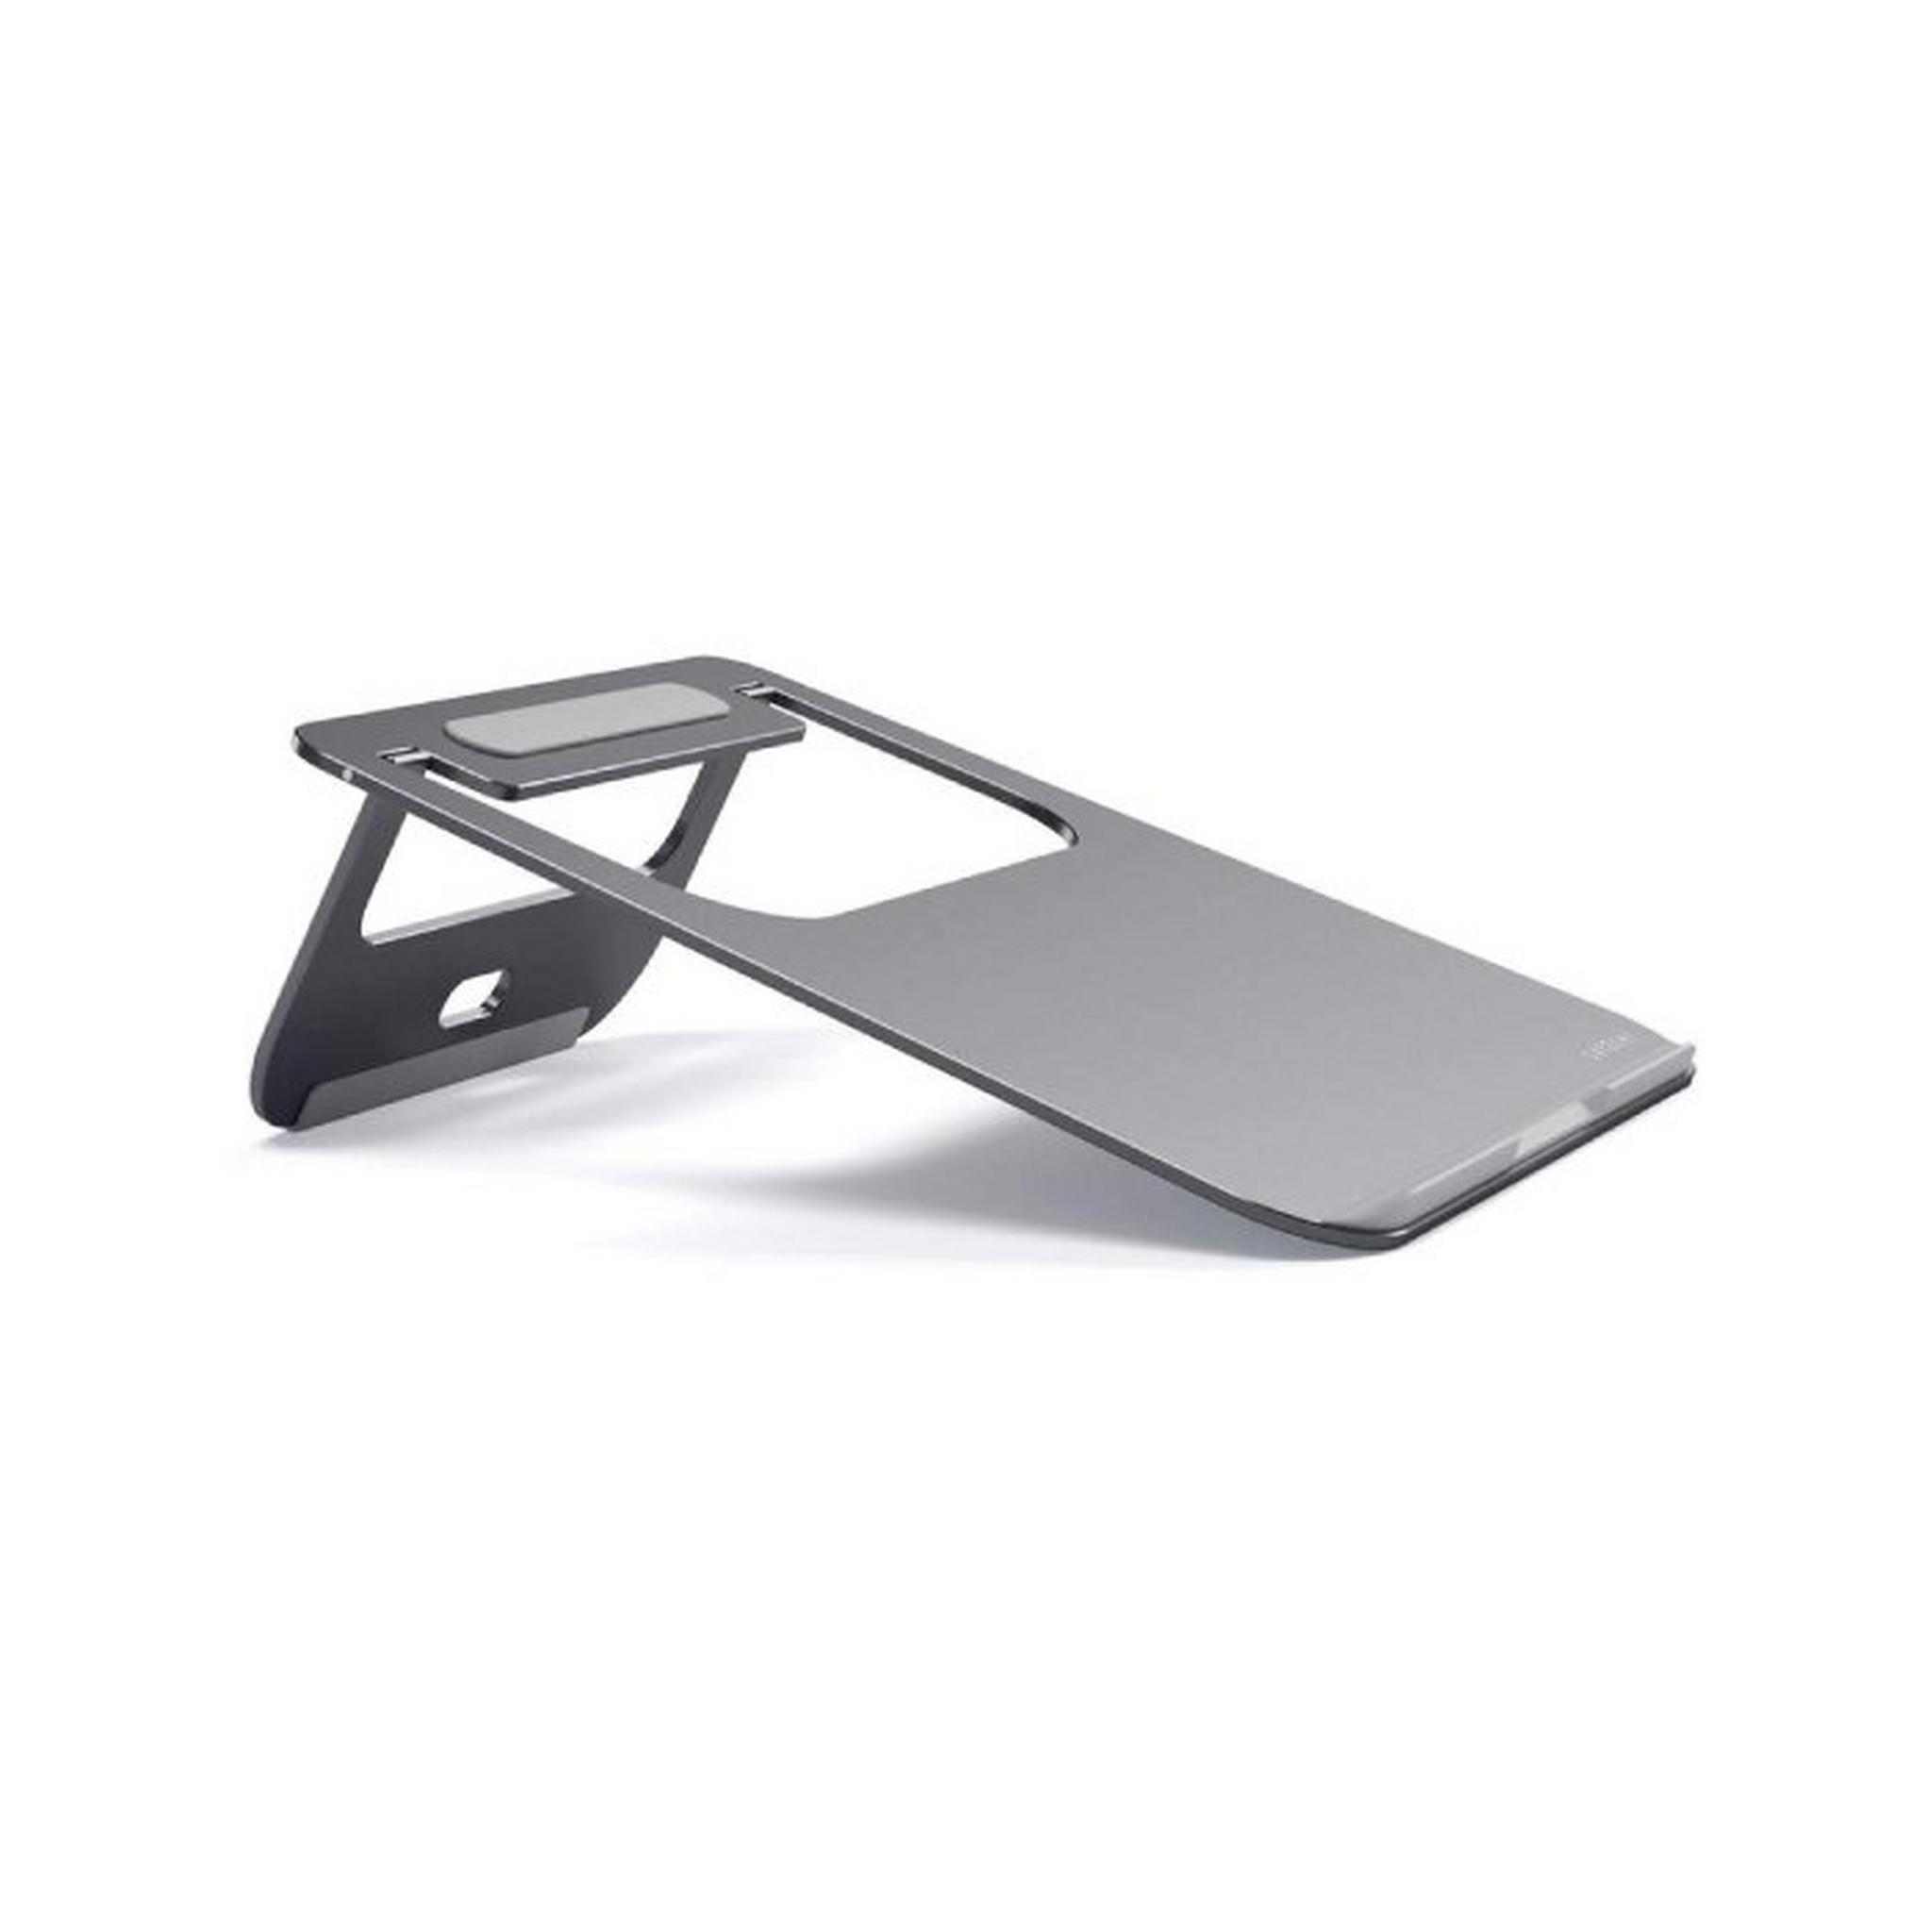 Satechi Aluminum Laptop Stand (ST-ALTSM) - Space Grey